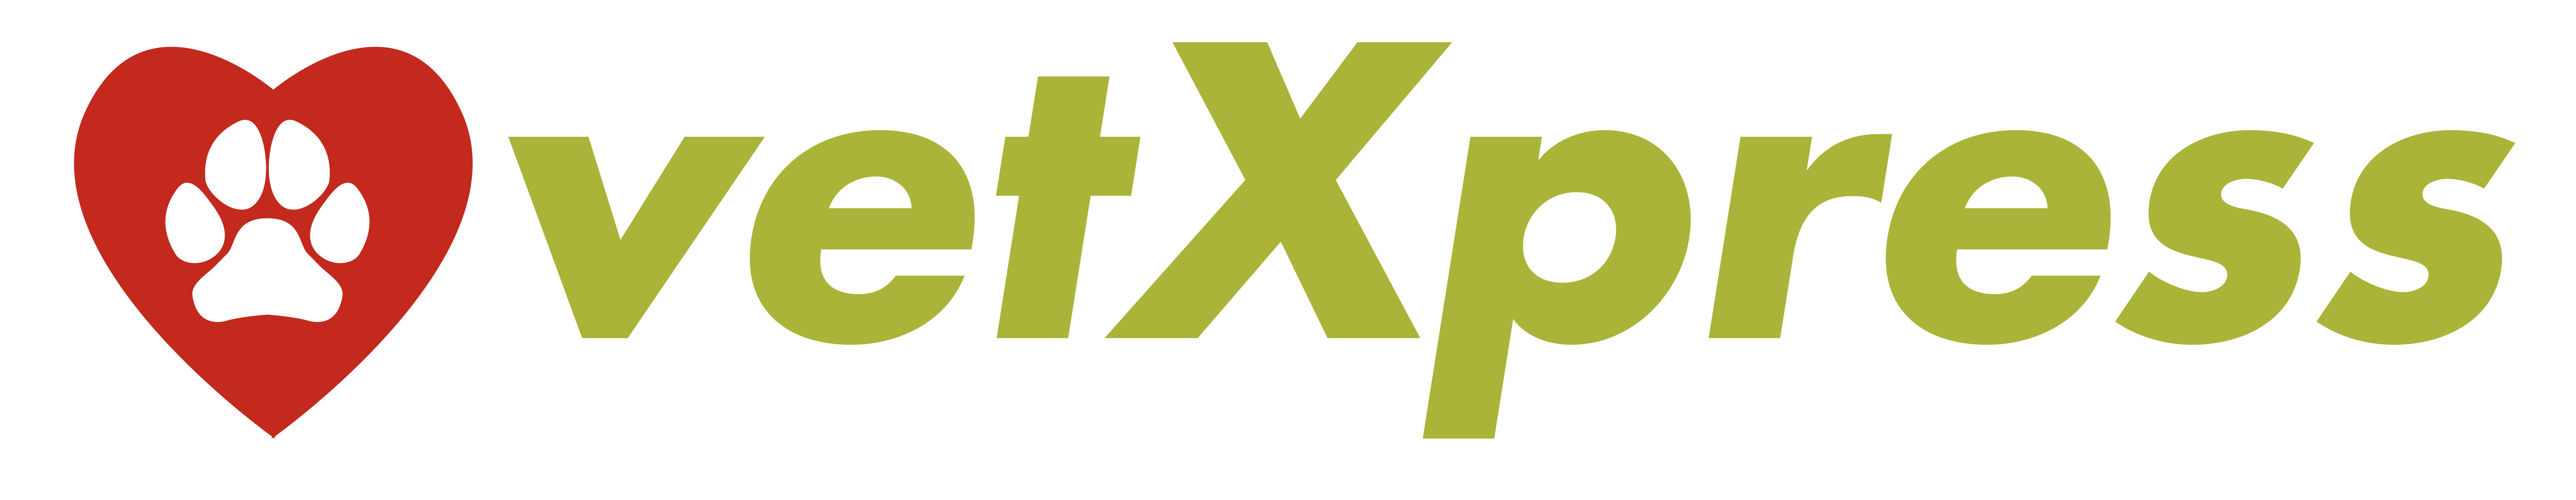 vetXpress Logo